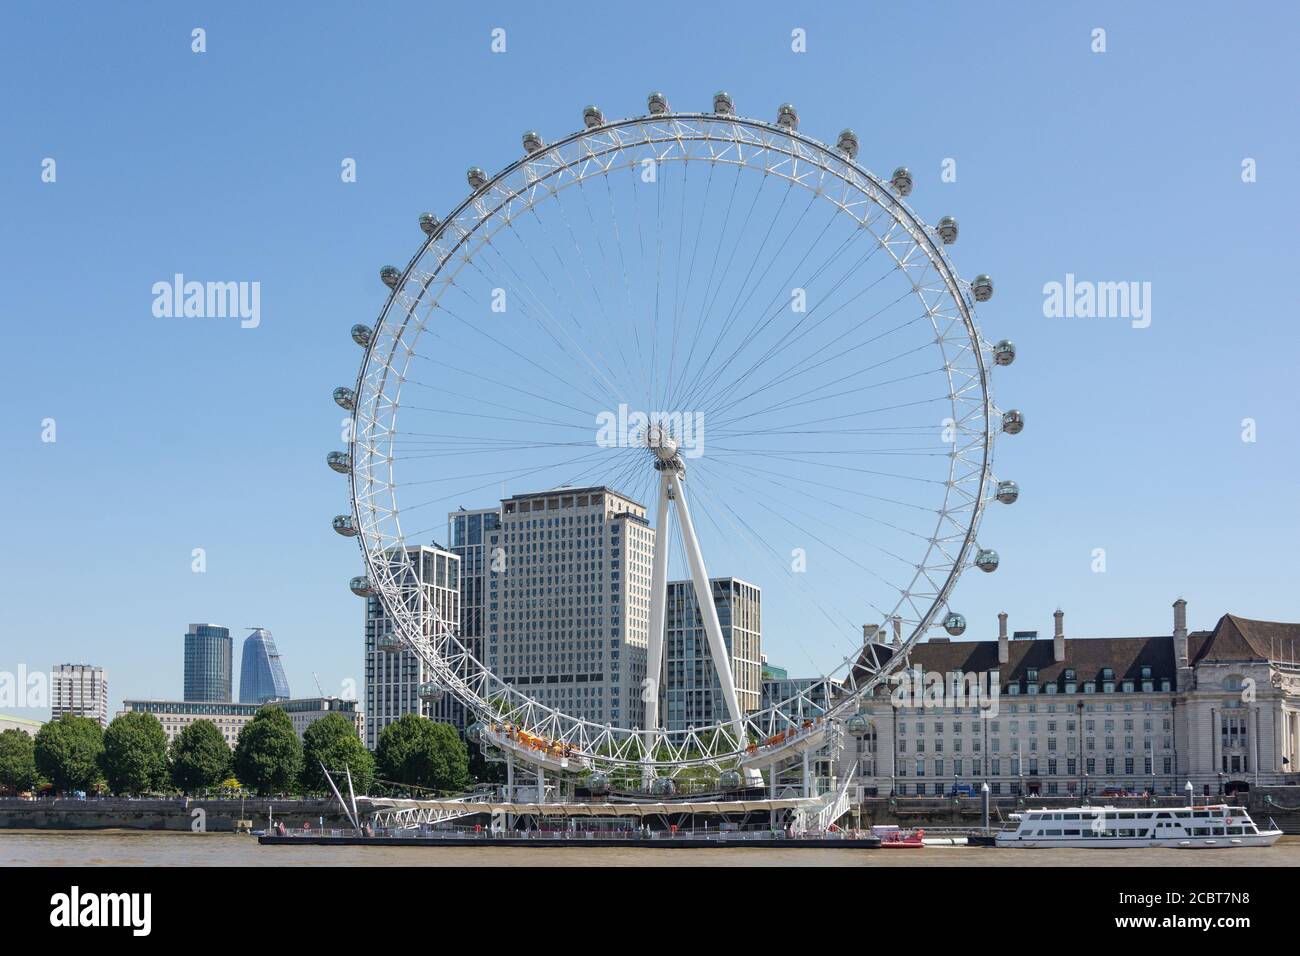 Das London Eye (Millennium Wheel) über die Themse, South Bank, City of Westminster, Greater London, England, Großbritannien Stockfoto